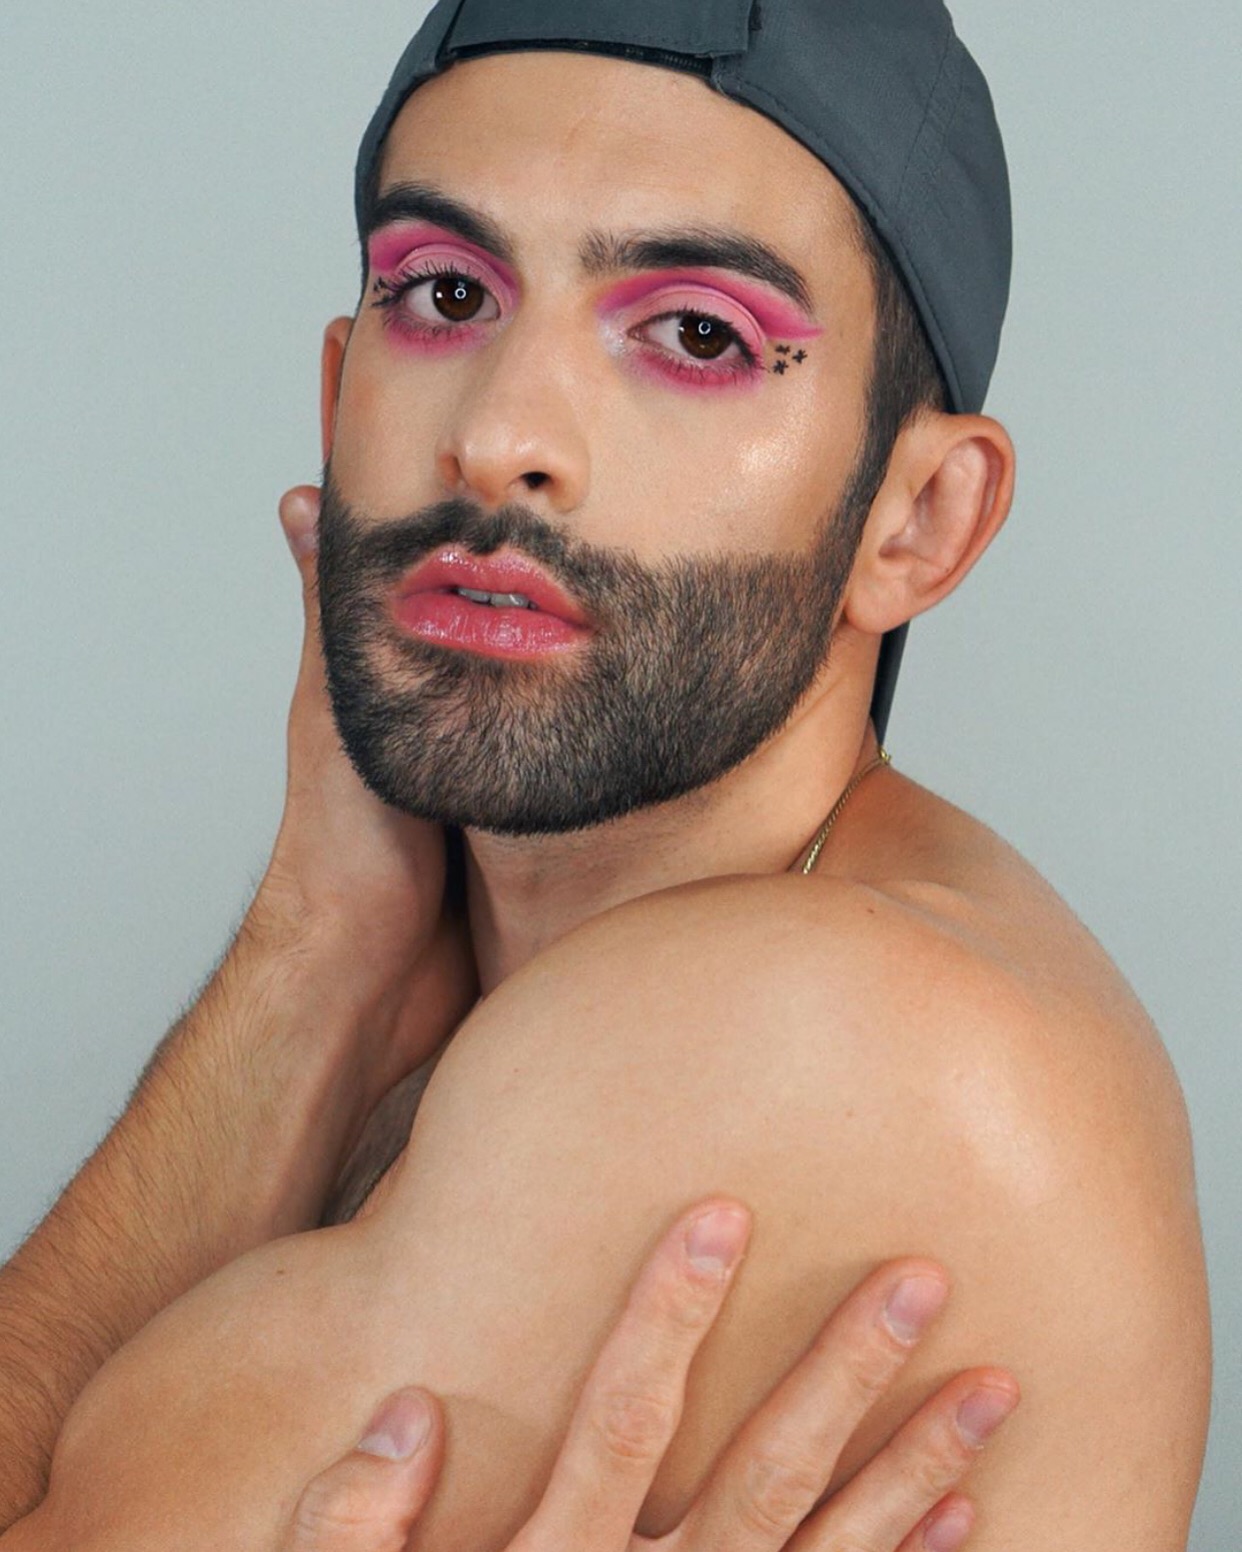 Nick Grant Loves his Dominic Paul cosmetics contour palette